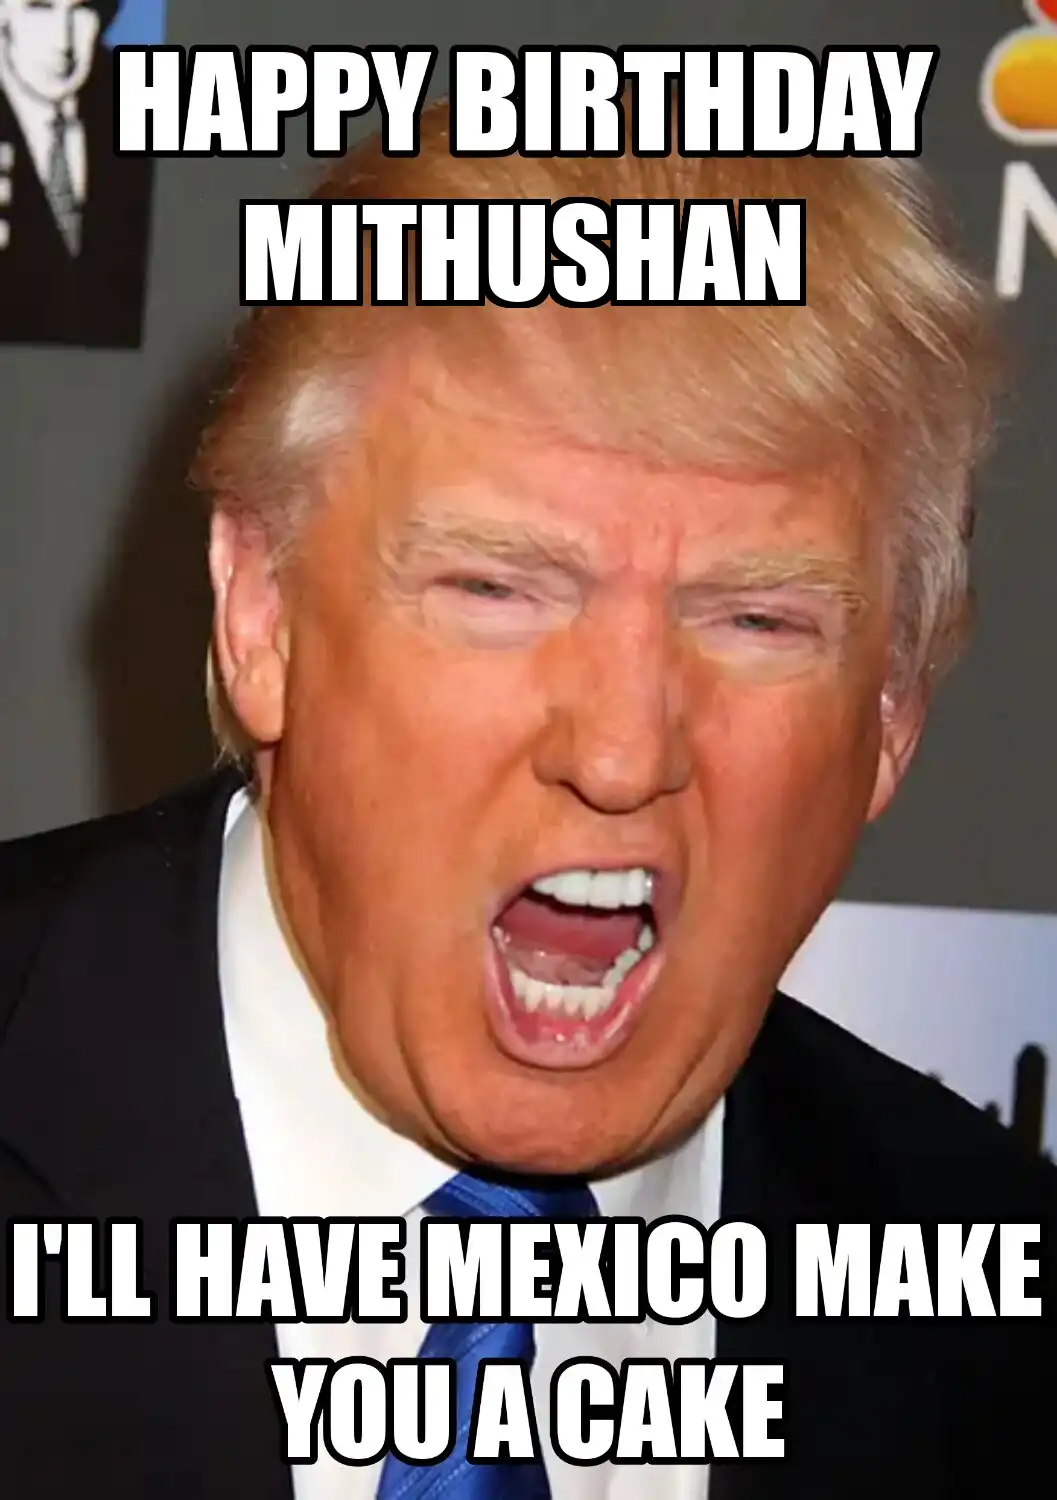 Happy Birthday Mithushan Mexico Make You A Cake Meme